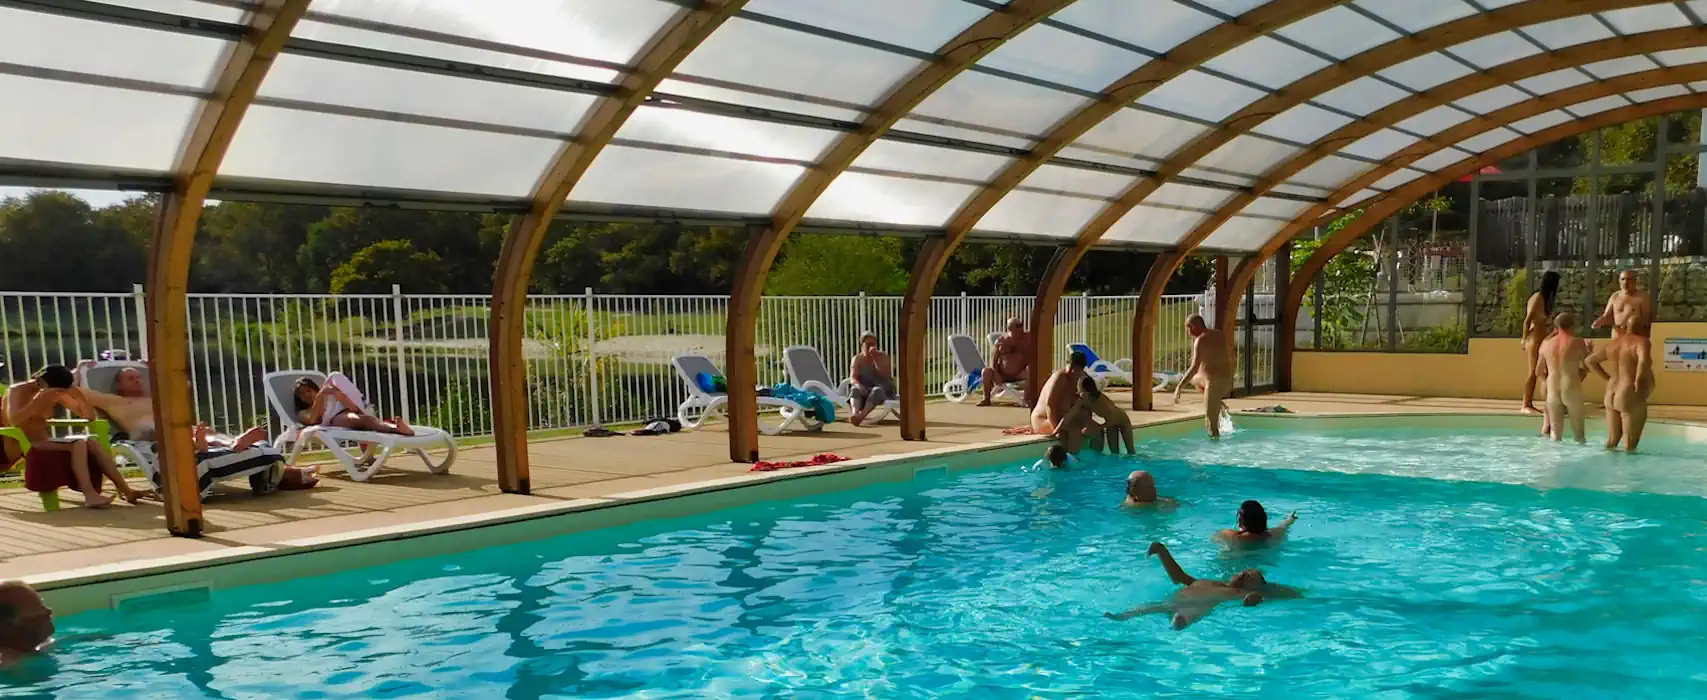 Naturisme Camping piscine couverte chauffée